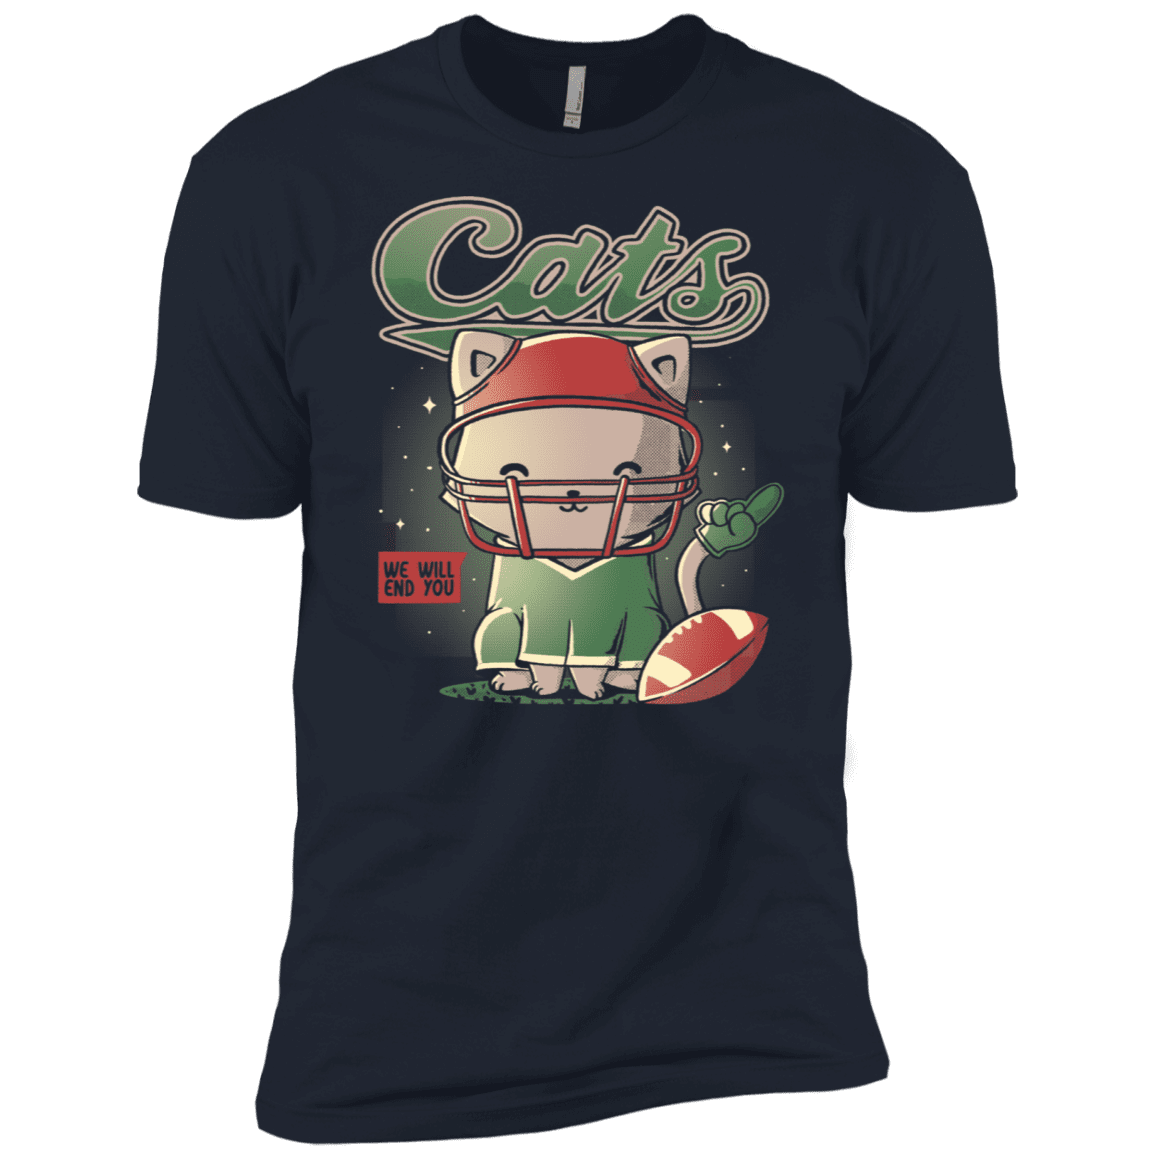 T-Shirts Midnight Navy / X-Small Cats Football Men's Premium T-Shirt